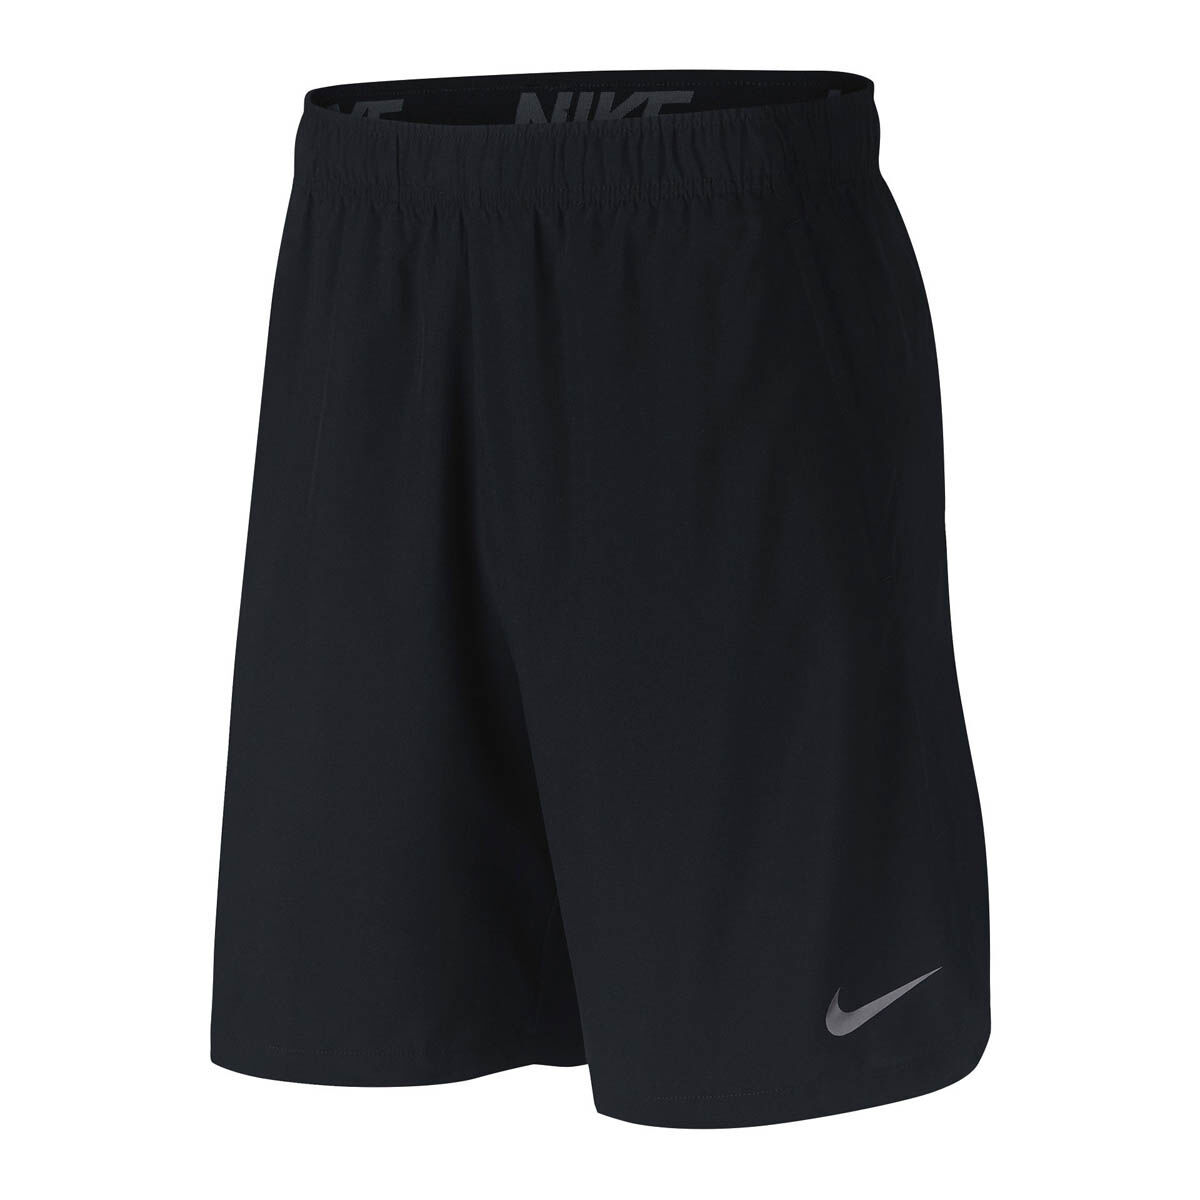 nike black sports shorts